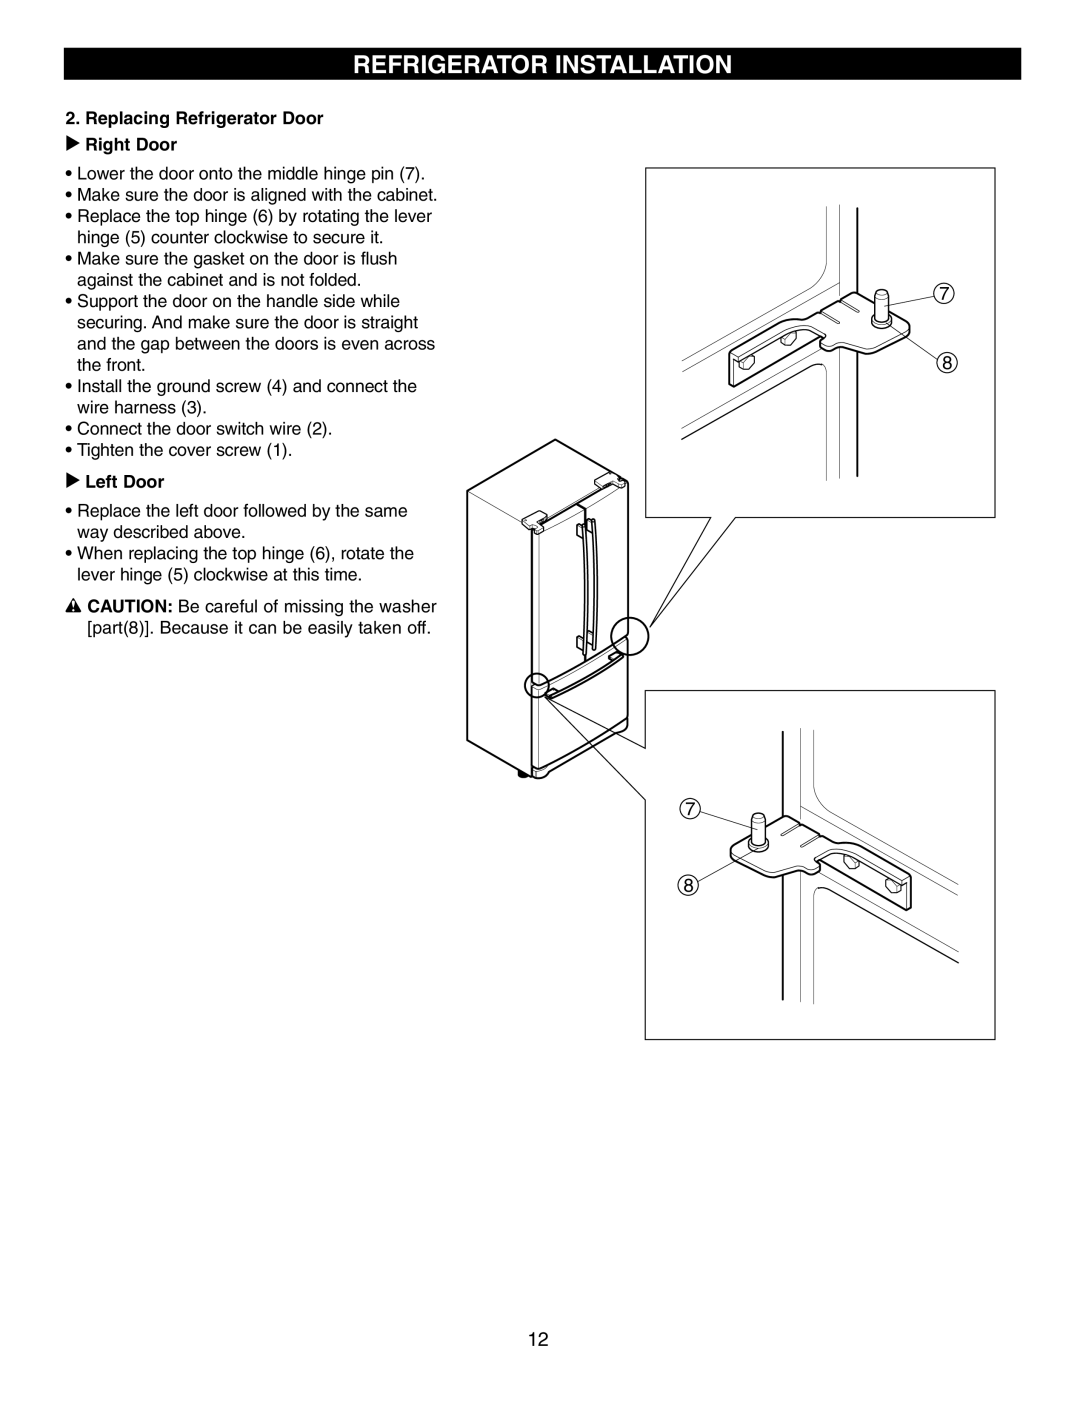 LG Electronics LFC25760 manual Refrigerator Installation, Replacing Refrigerator Door u Right Door, u Left Door 